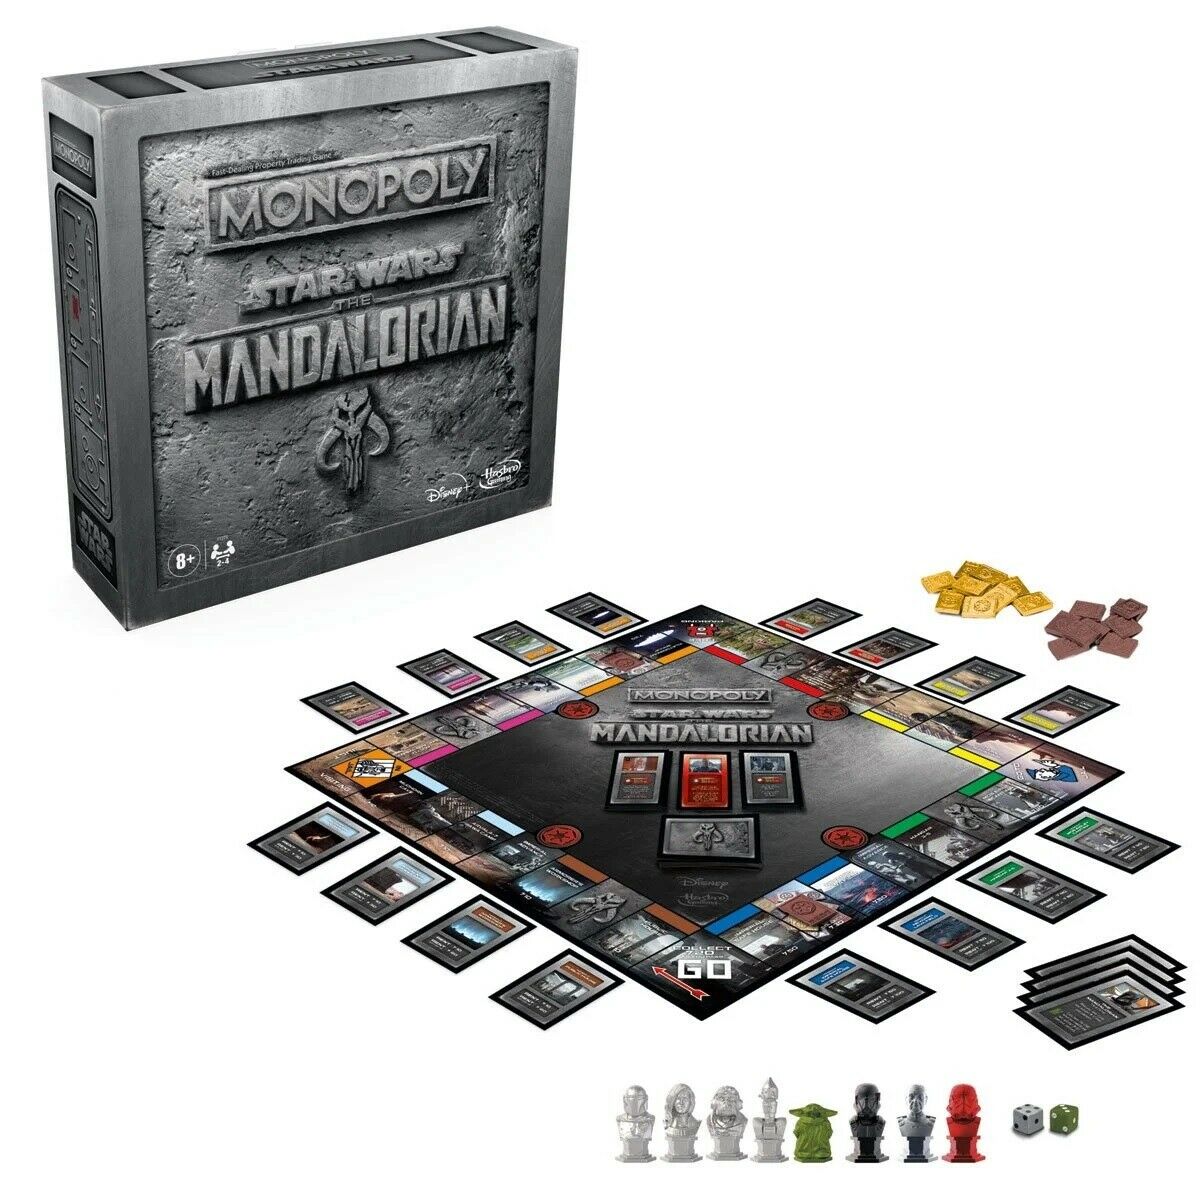 Monopoly Star Wars: The Mandalorian Edition სამაგიდო თამაში